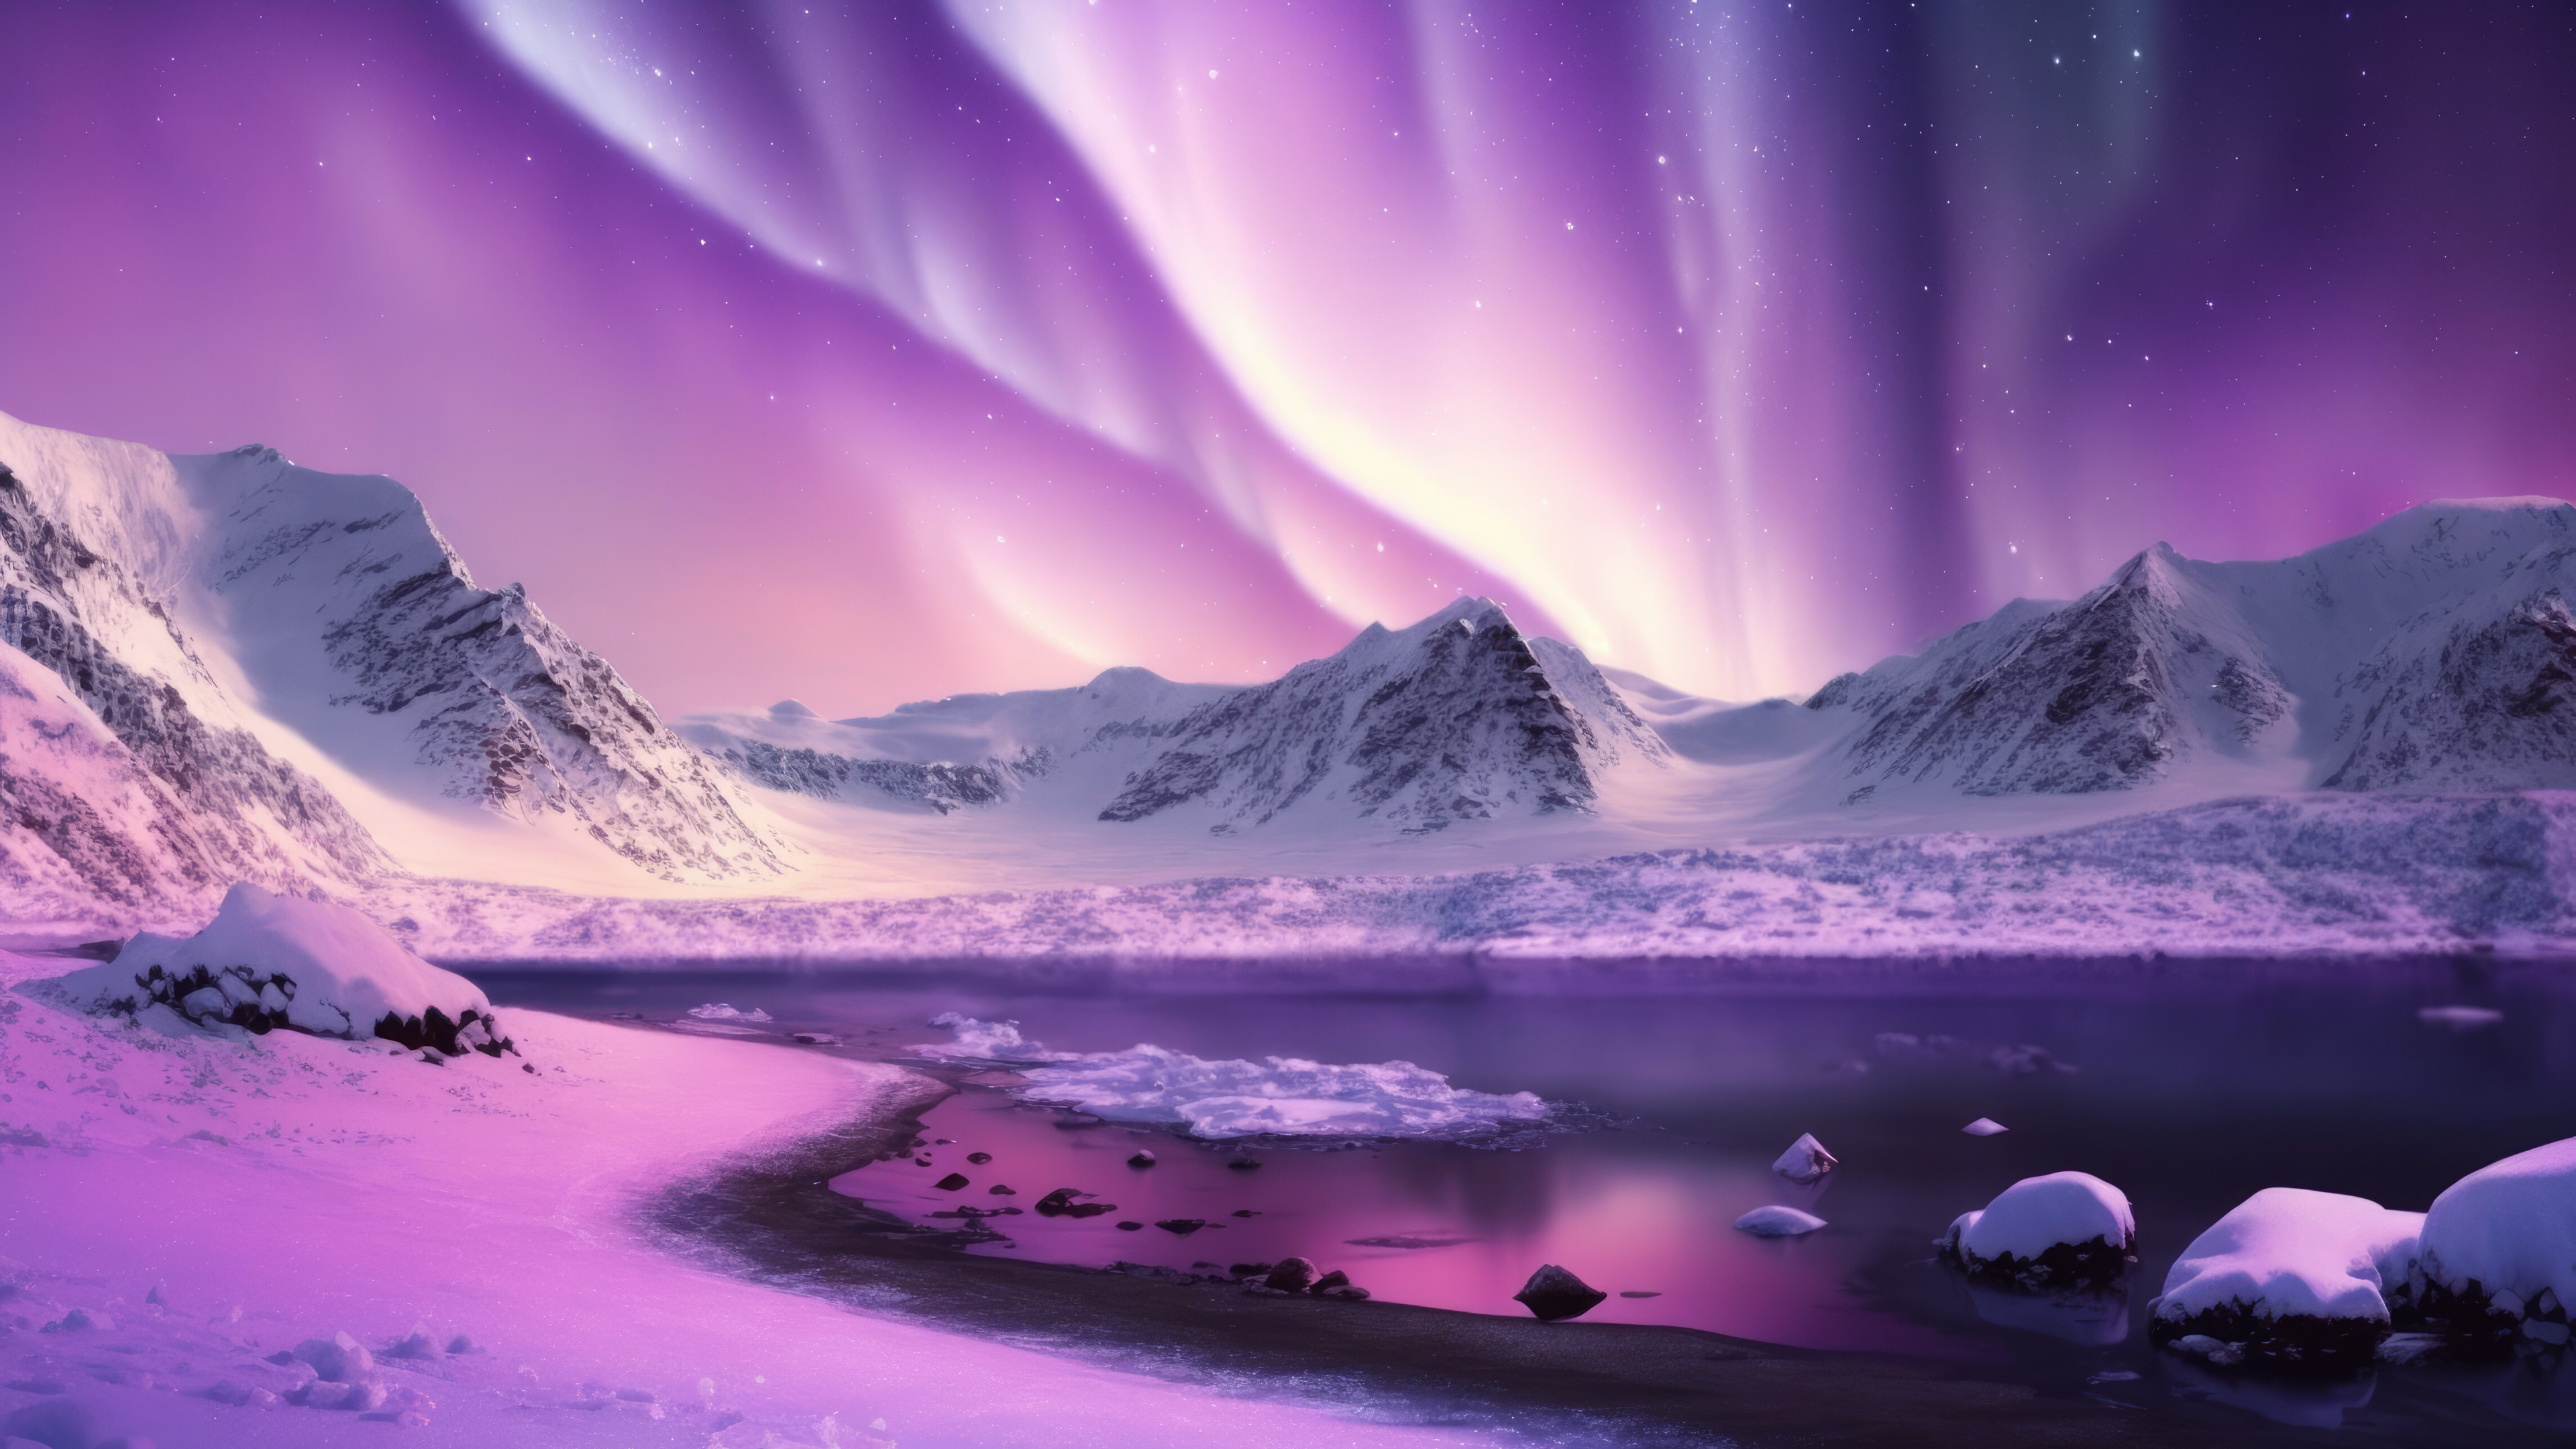 Download Wallpaper 3840x2160 Pink Purple Sky, Glacier, Lake, Northern Lights, Art 4k Wallpaper, Uhd Wallpaper, 16:9 Widescreen 3840x2160 HD Background, 29125